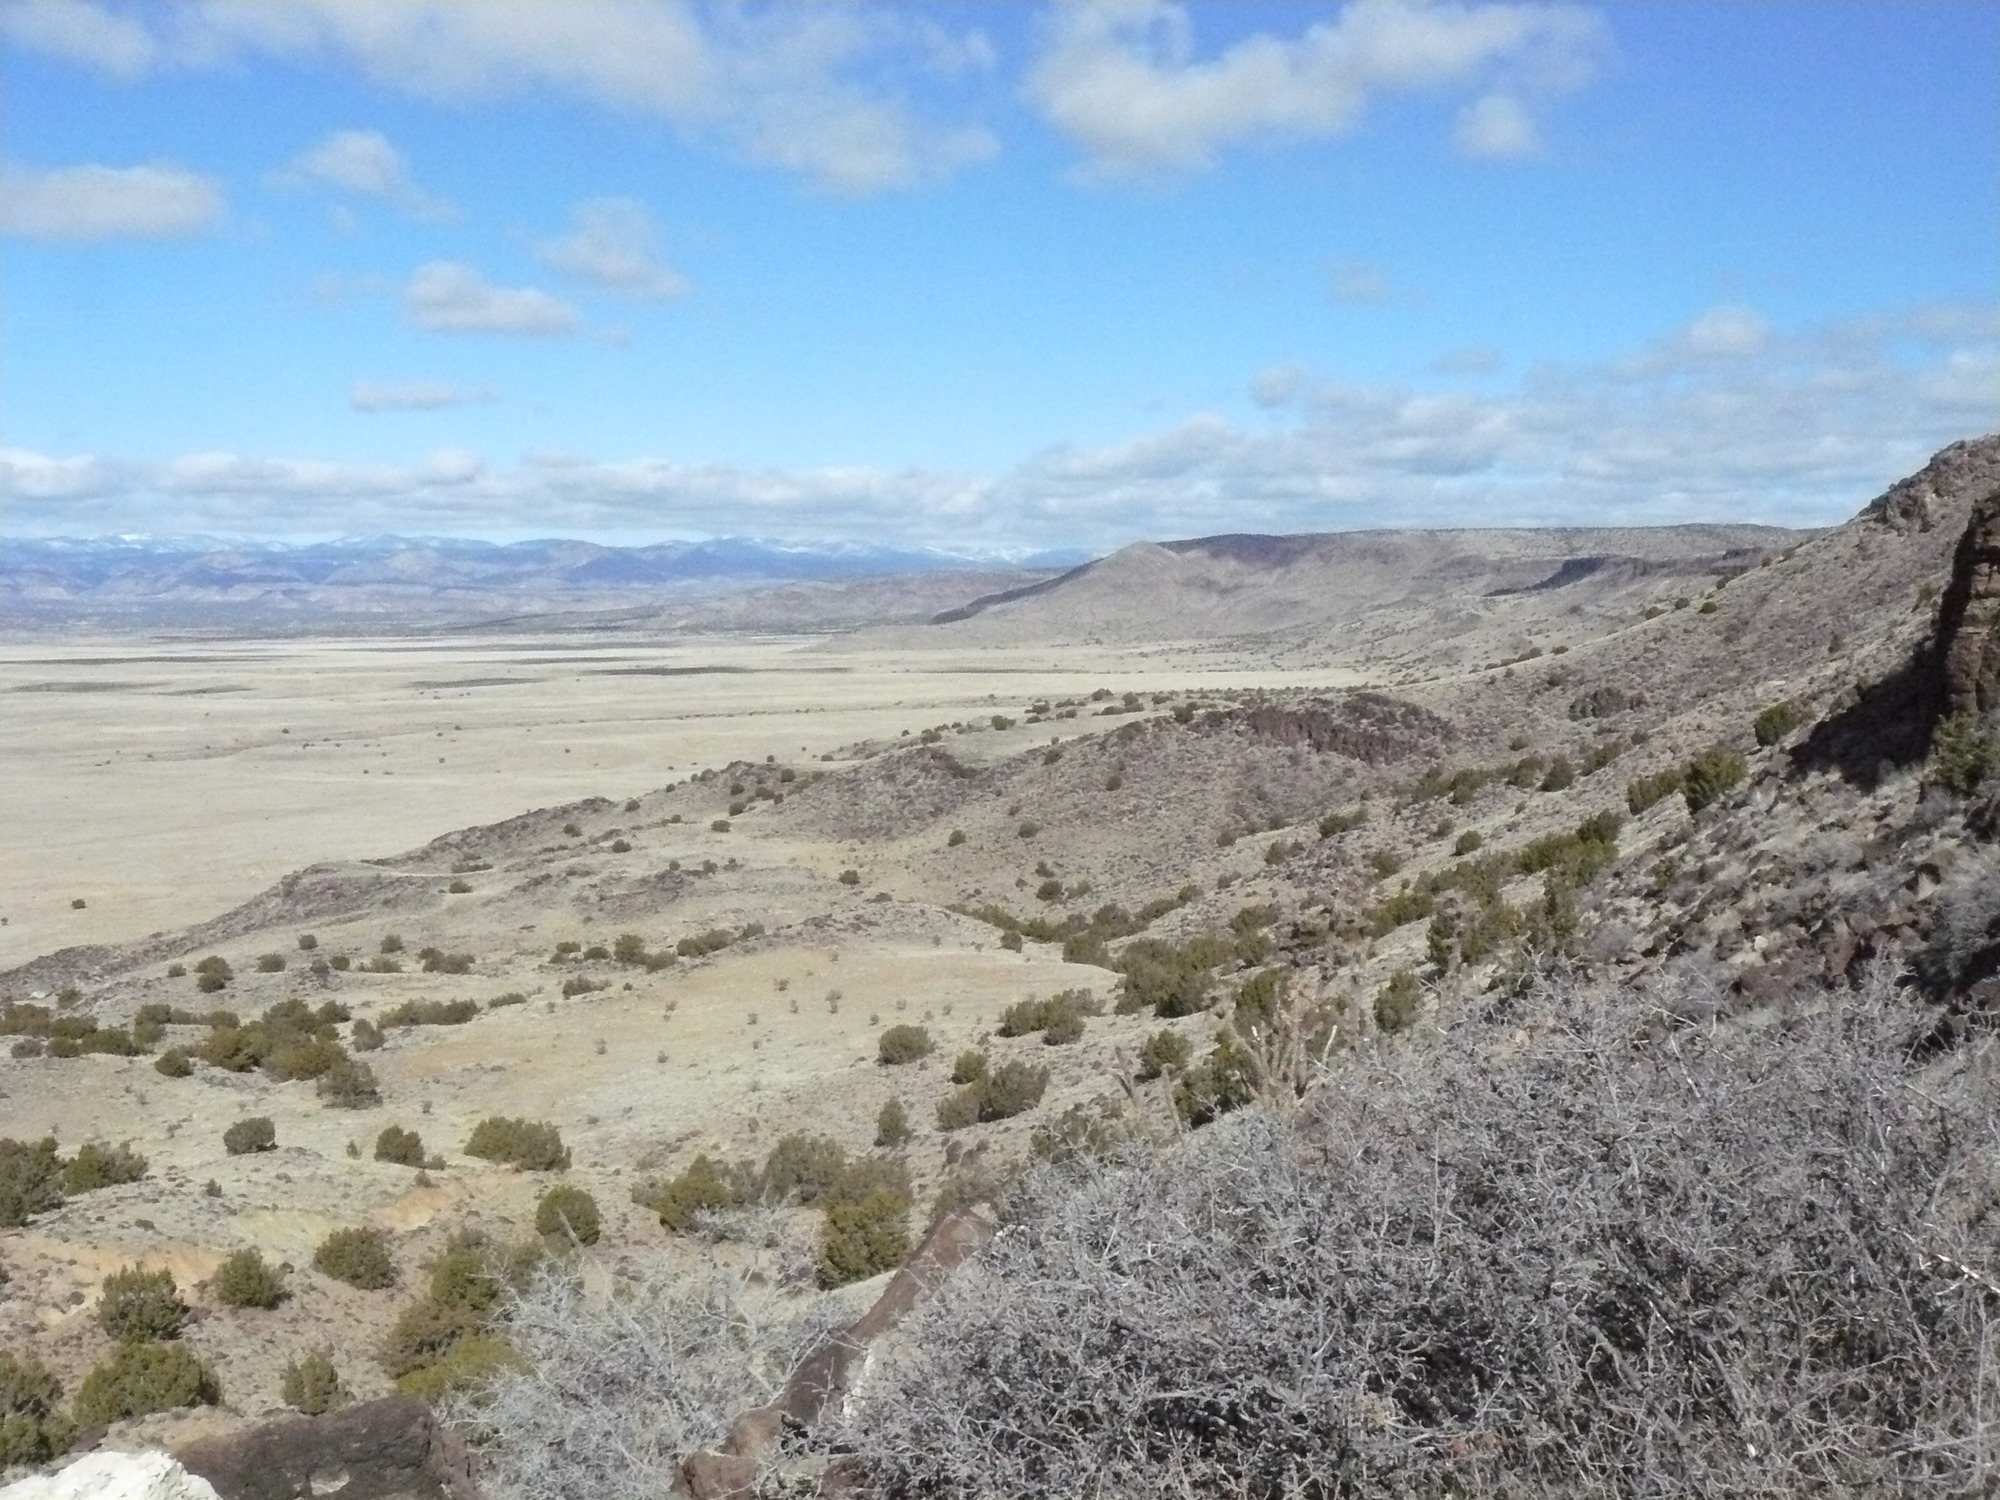 A mountain view from La Bajada Mesa near Santa Fe, NM